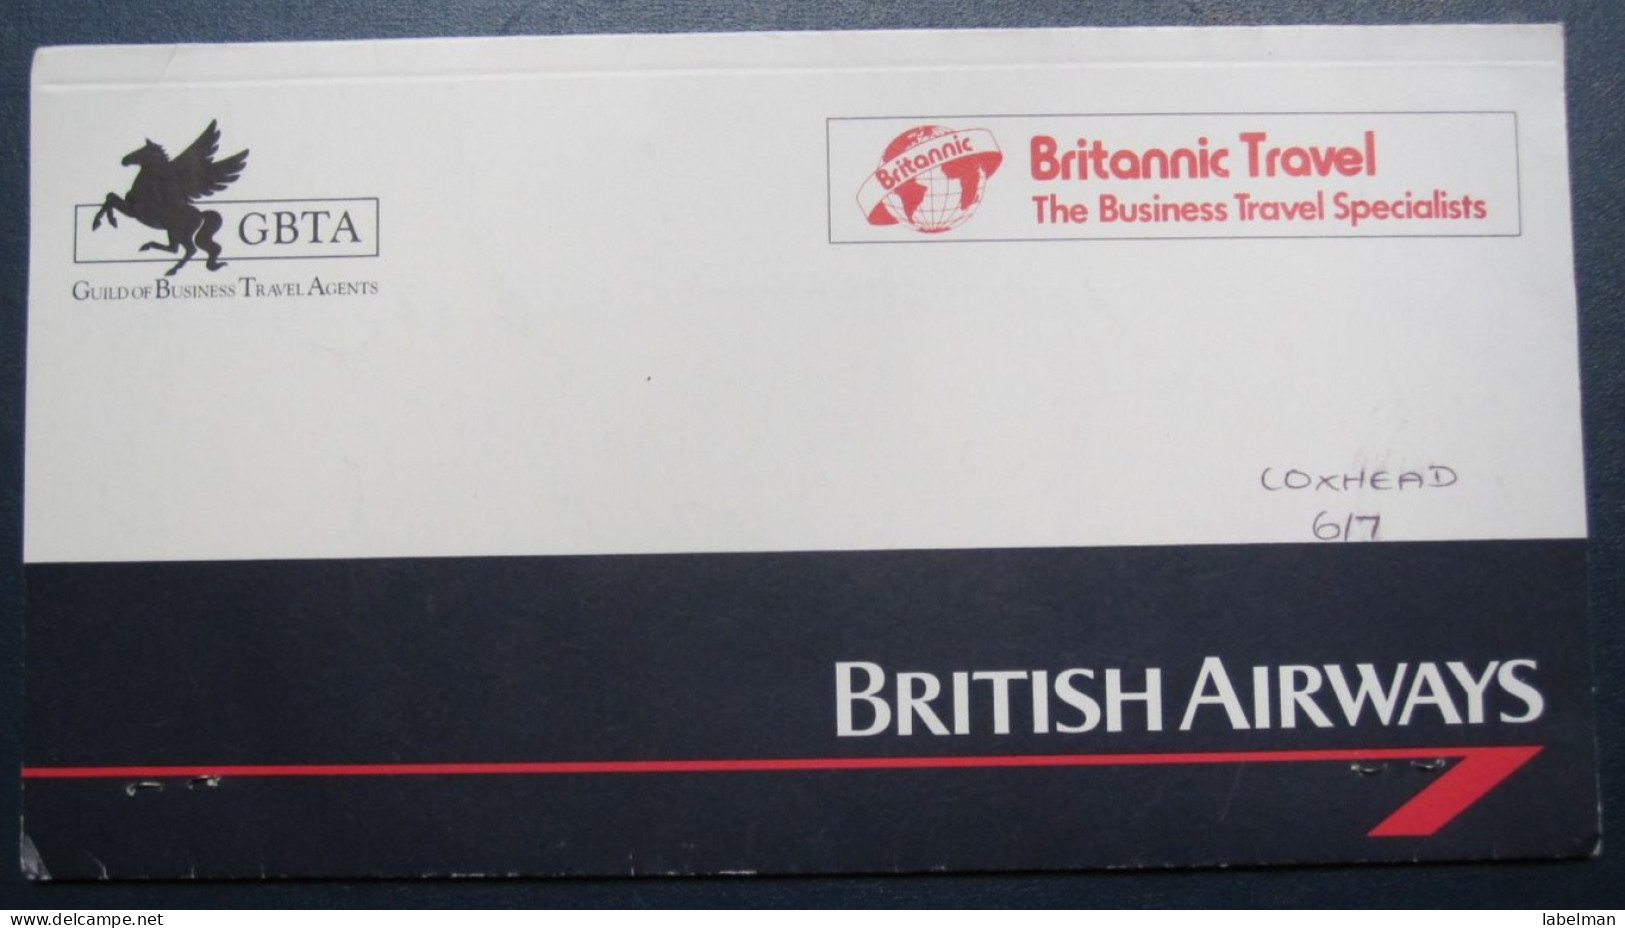 UK UNITED KINGDOM ENGLAND BRITISH AIRWAYS AIRLINE TICKET HOLDER BOOKLET VIP TAG LUGGAGE BAGGAGE PLANE AIRCRAFT AIRPORT - Mundo